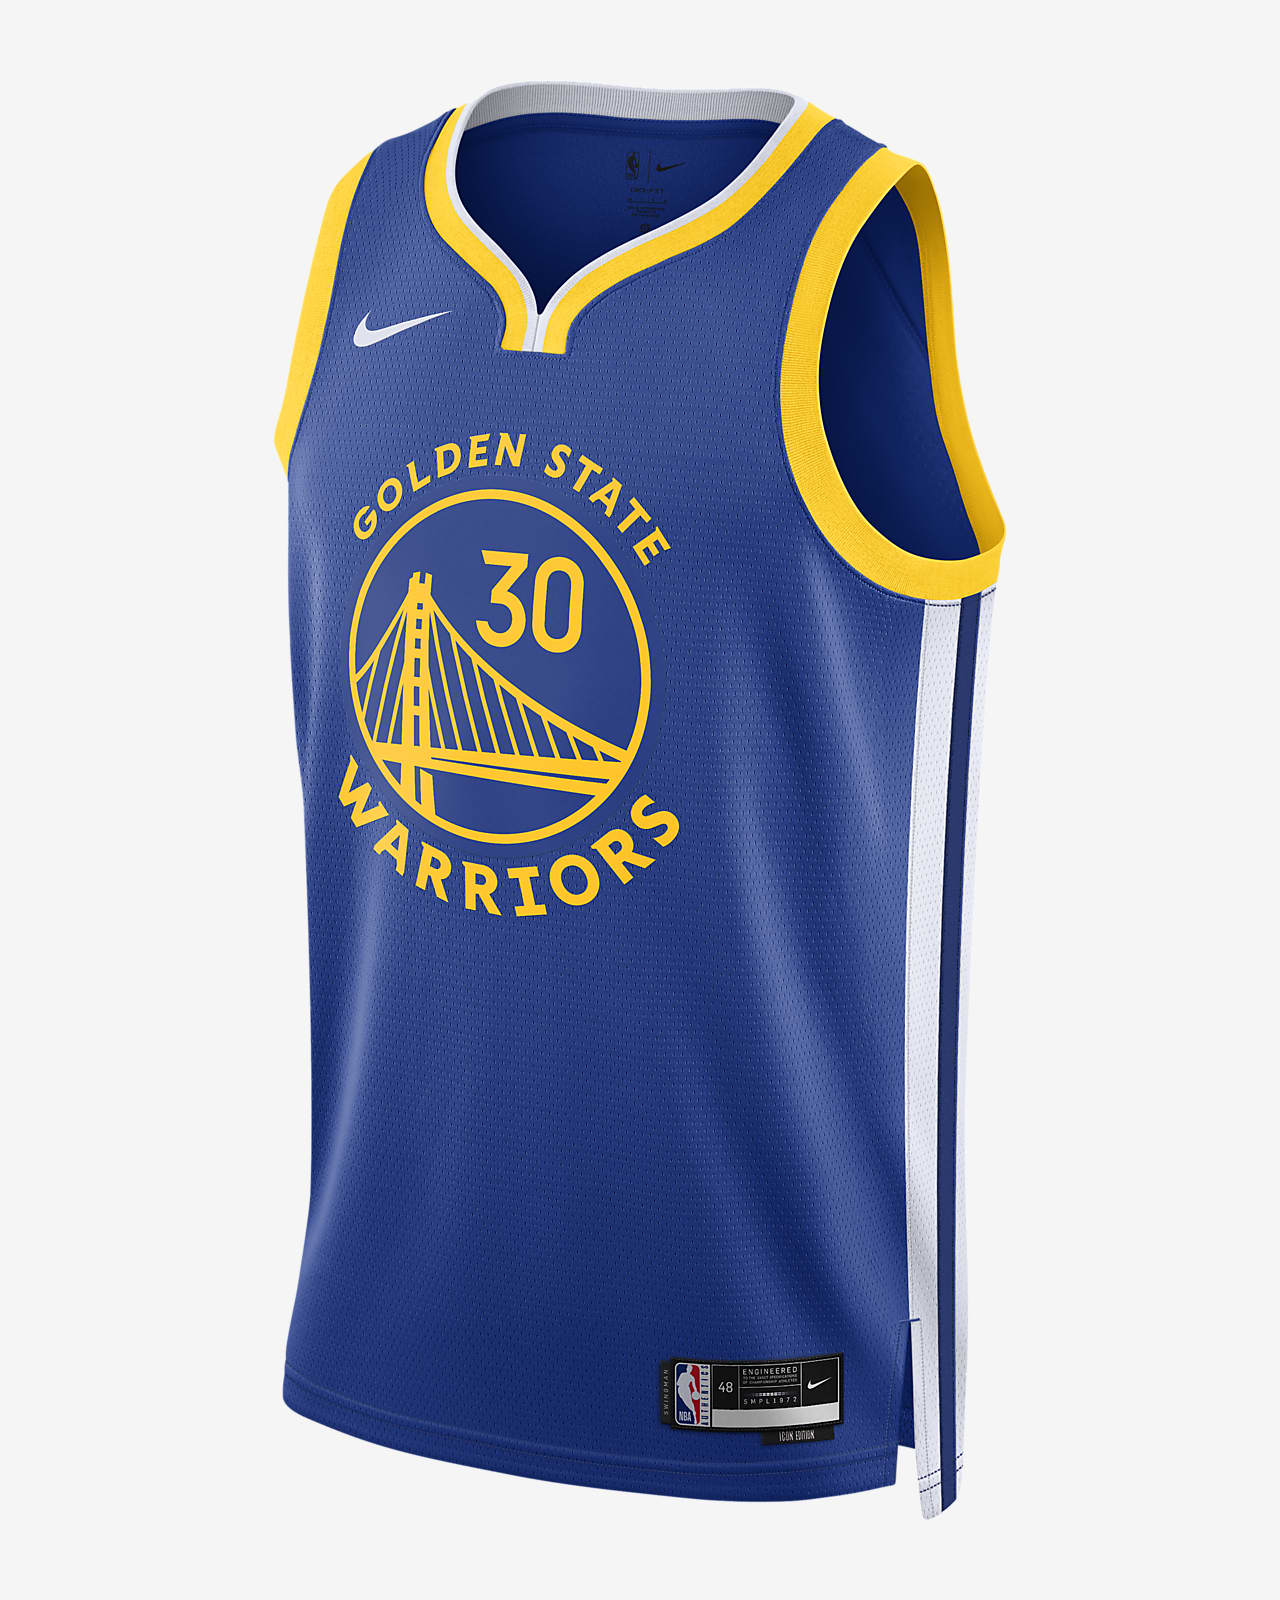 Golden State Warriors Jerseys & Gear. Nike UK